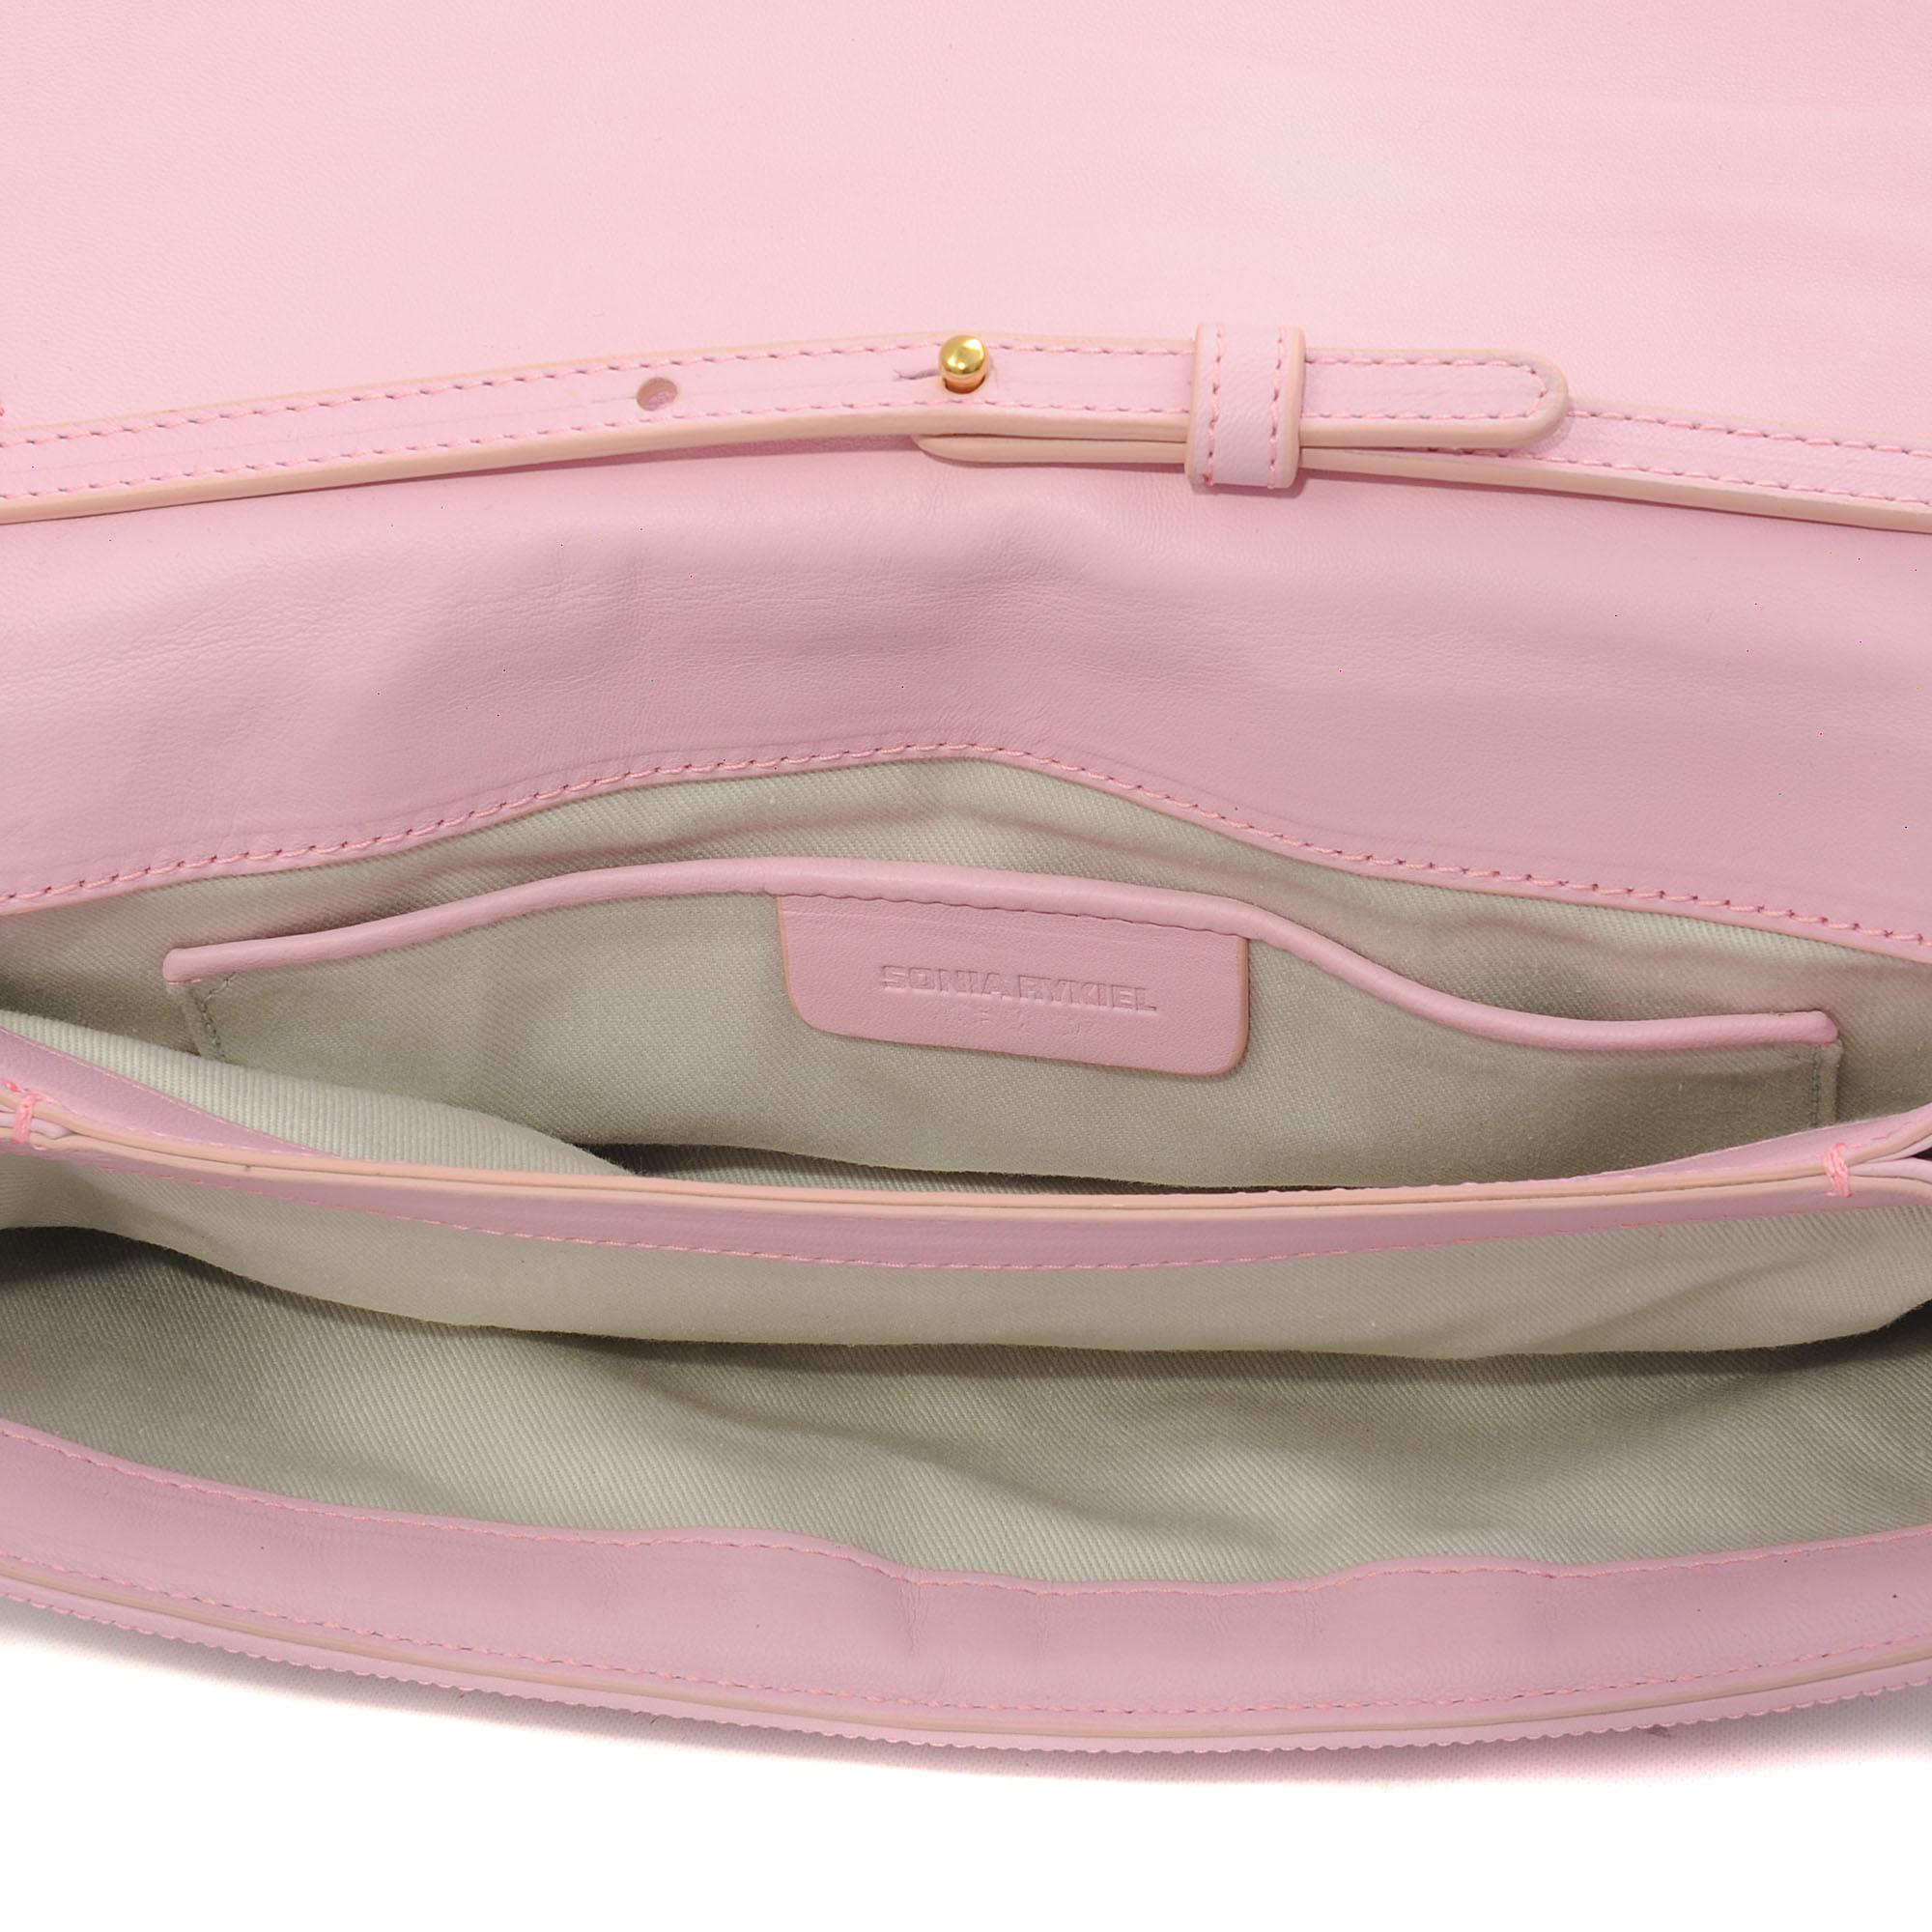 Sonia rykiel Besace Embellished Acetate Shoulder Bag in Pink | Lyst